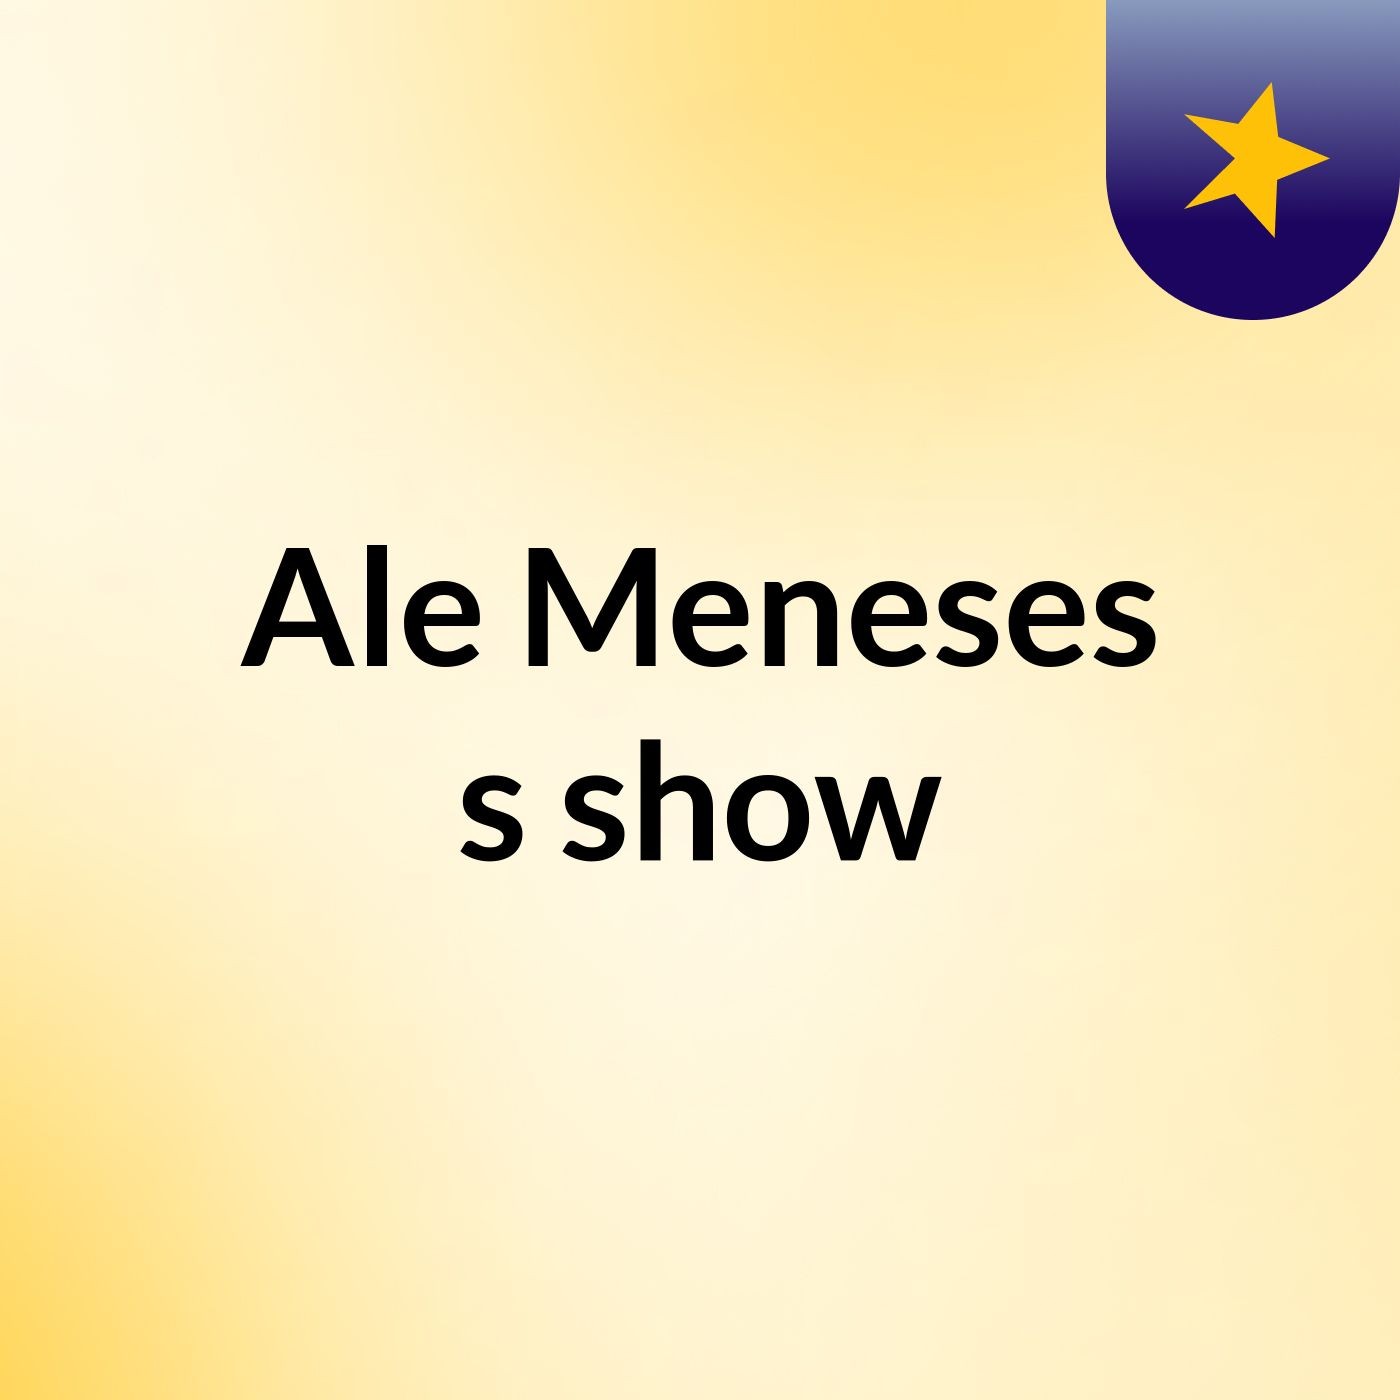 Ale Meneses's show